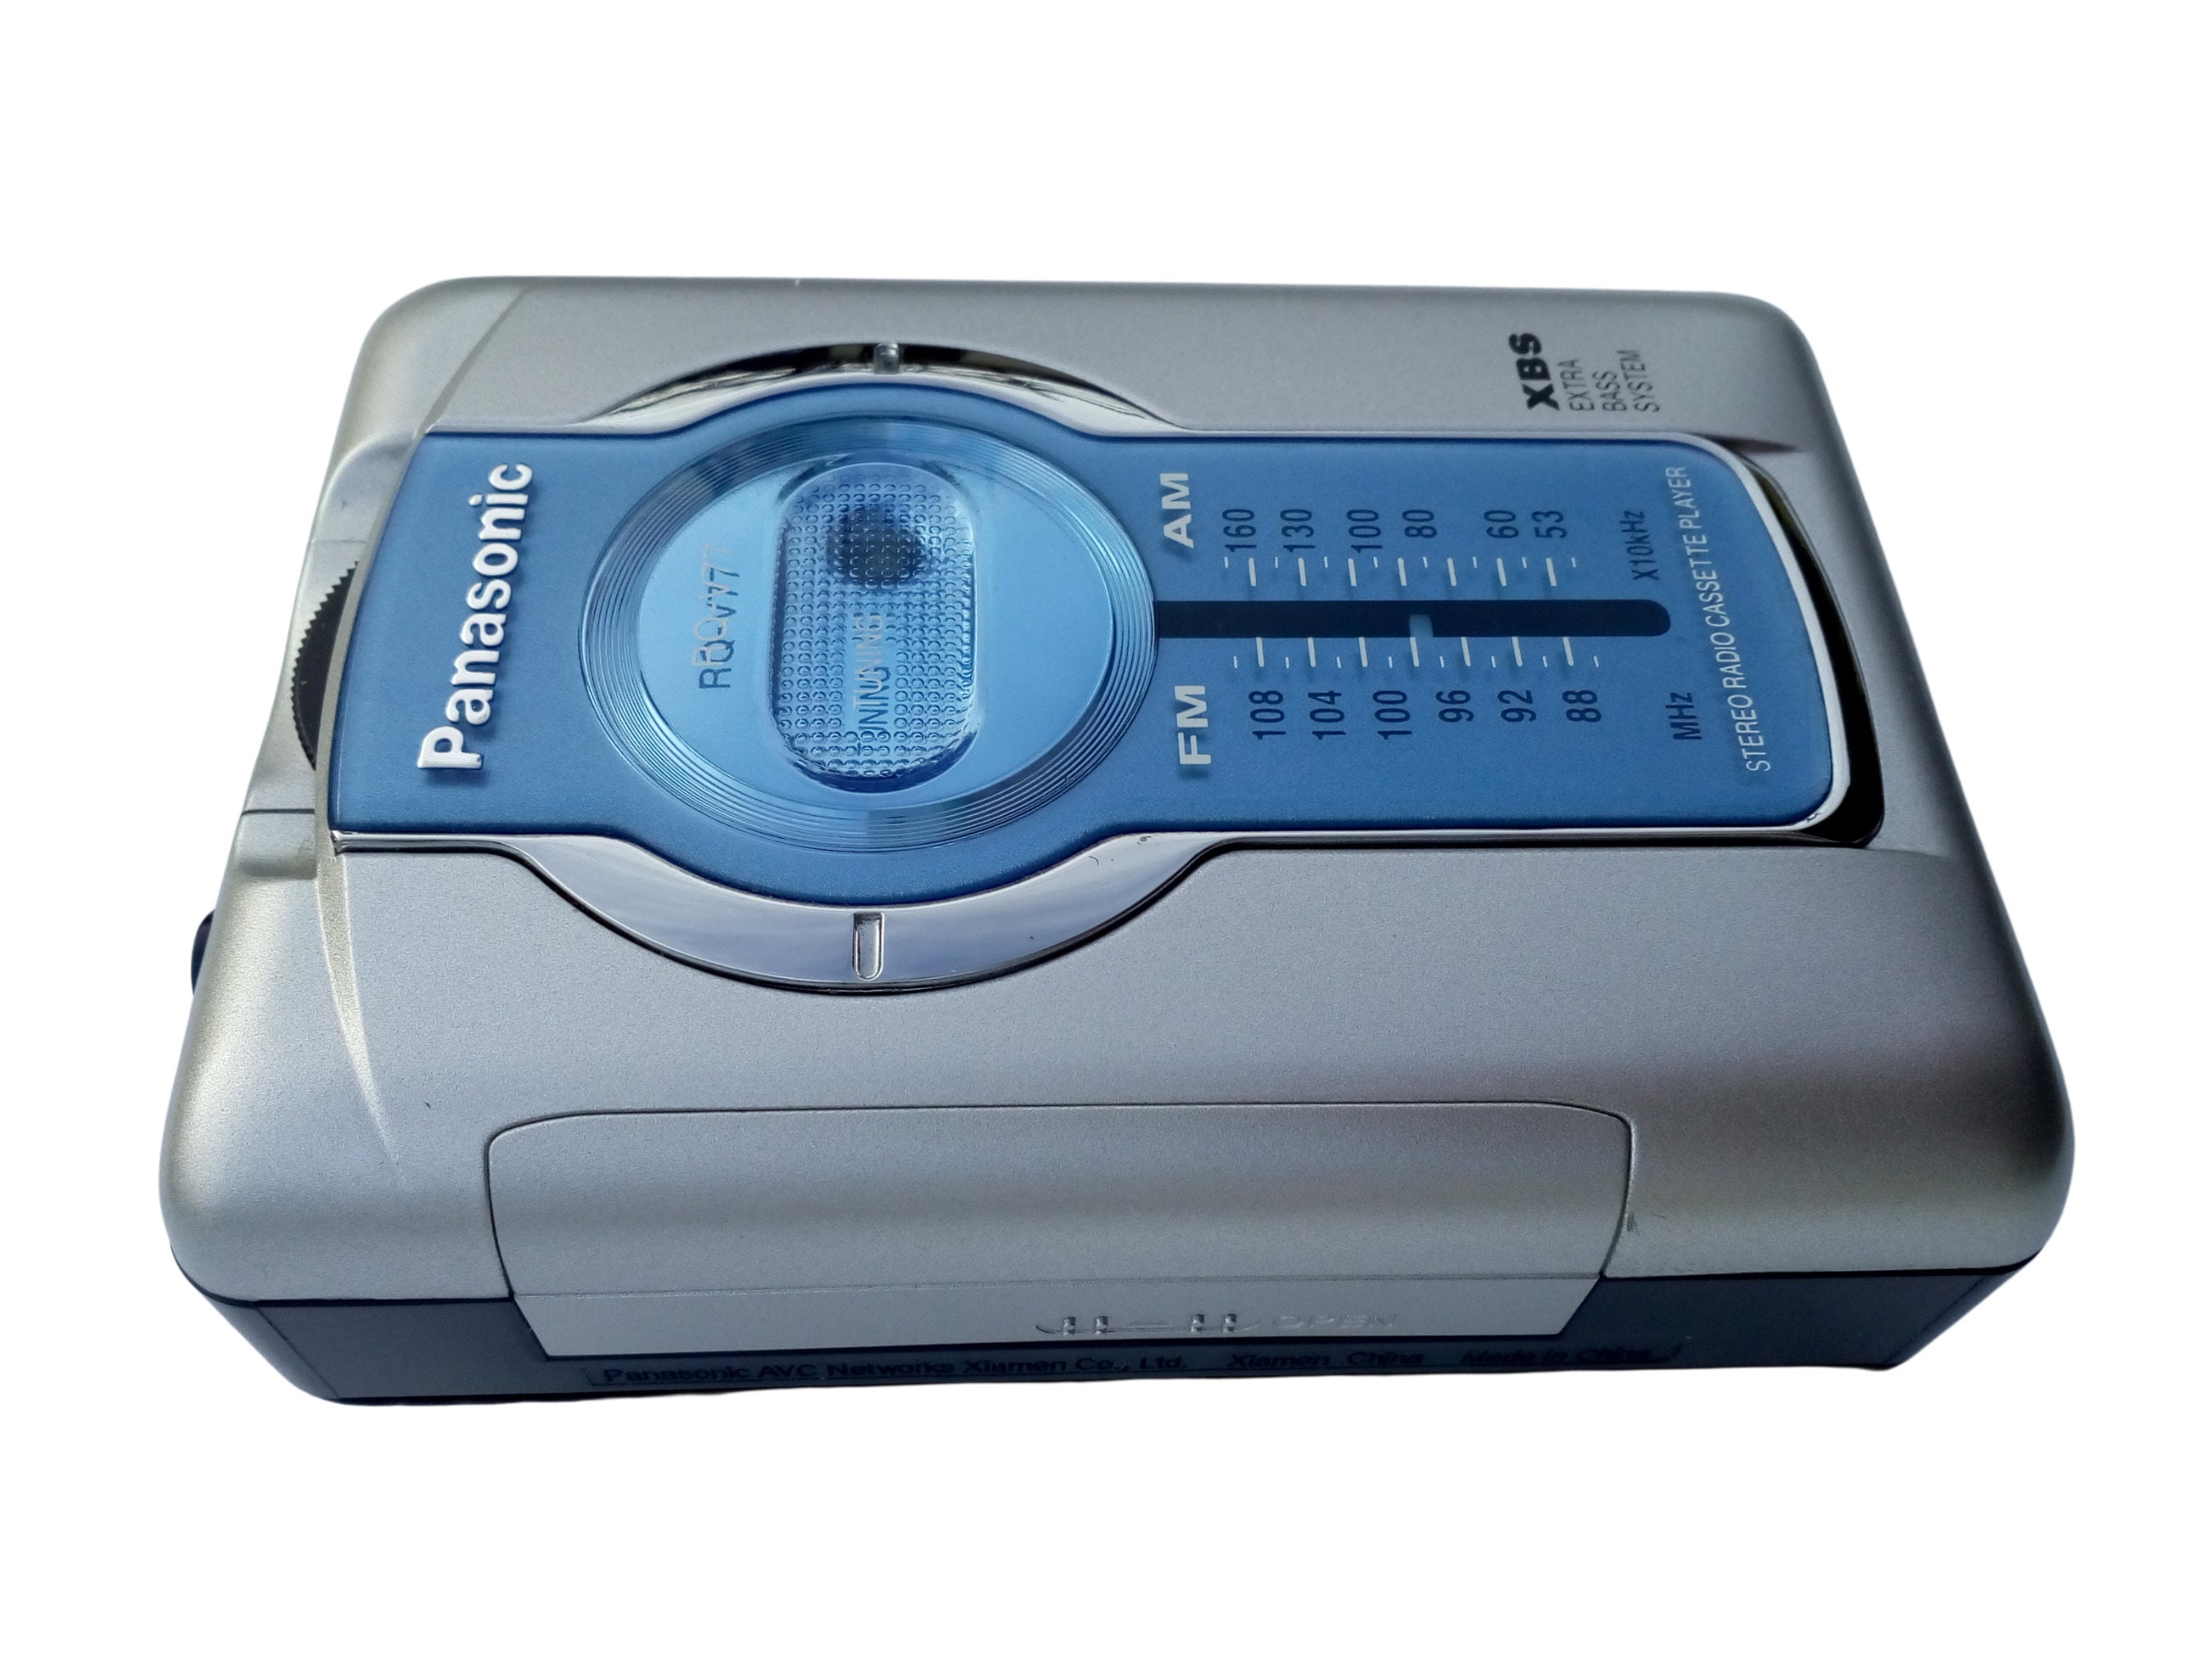 PANASONIC RQ-V75 Walkman registratore cassette portatile vintage  musicassette - Simpson Advanced Chiropractic & Medical Center